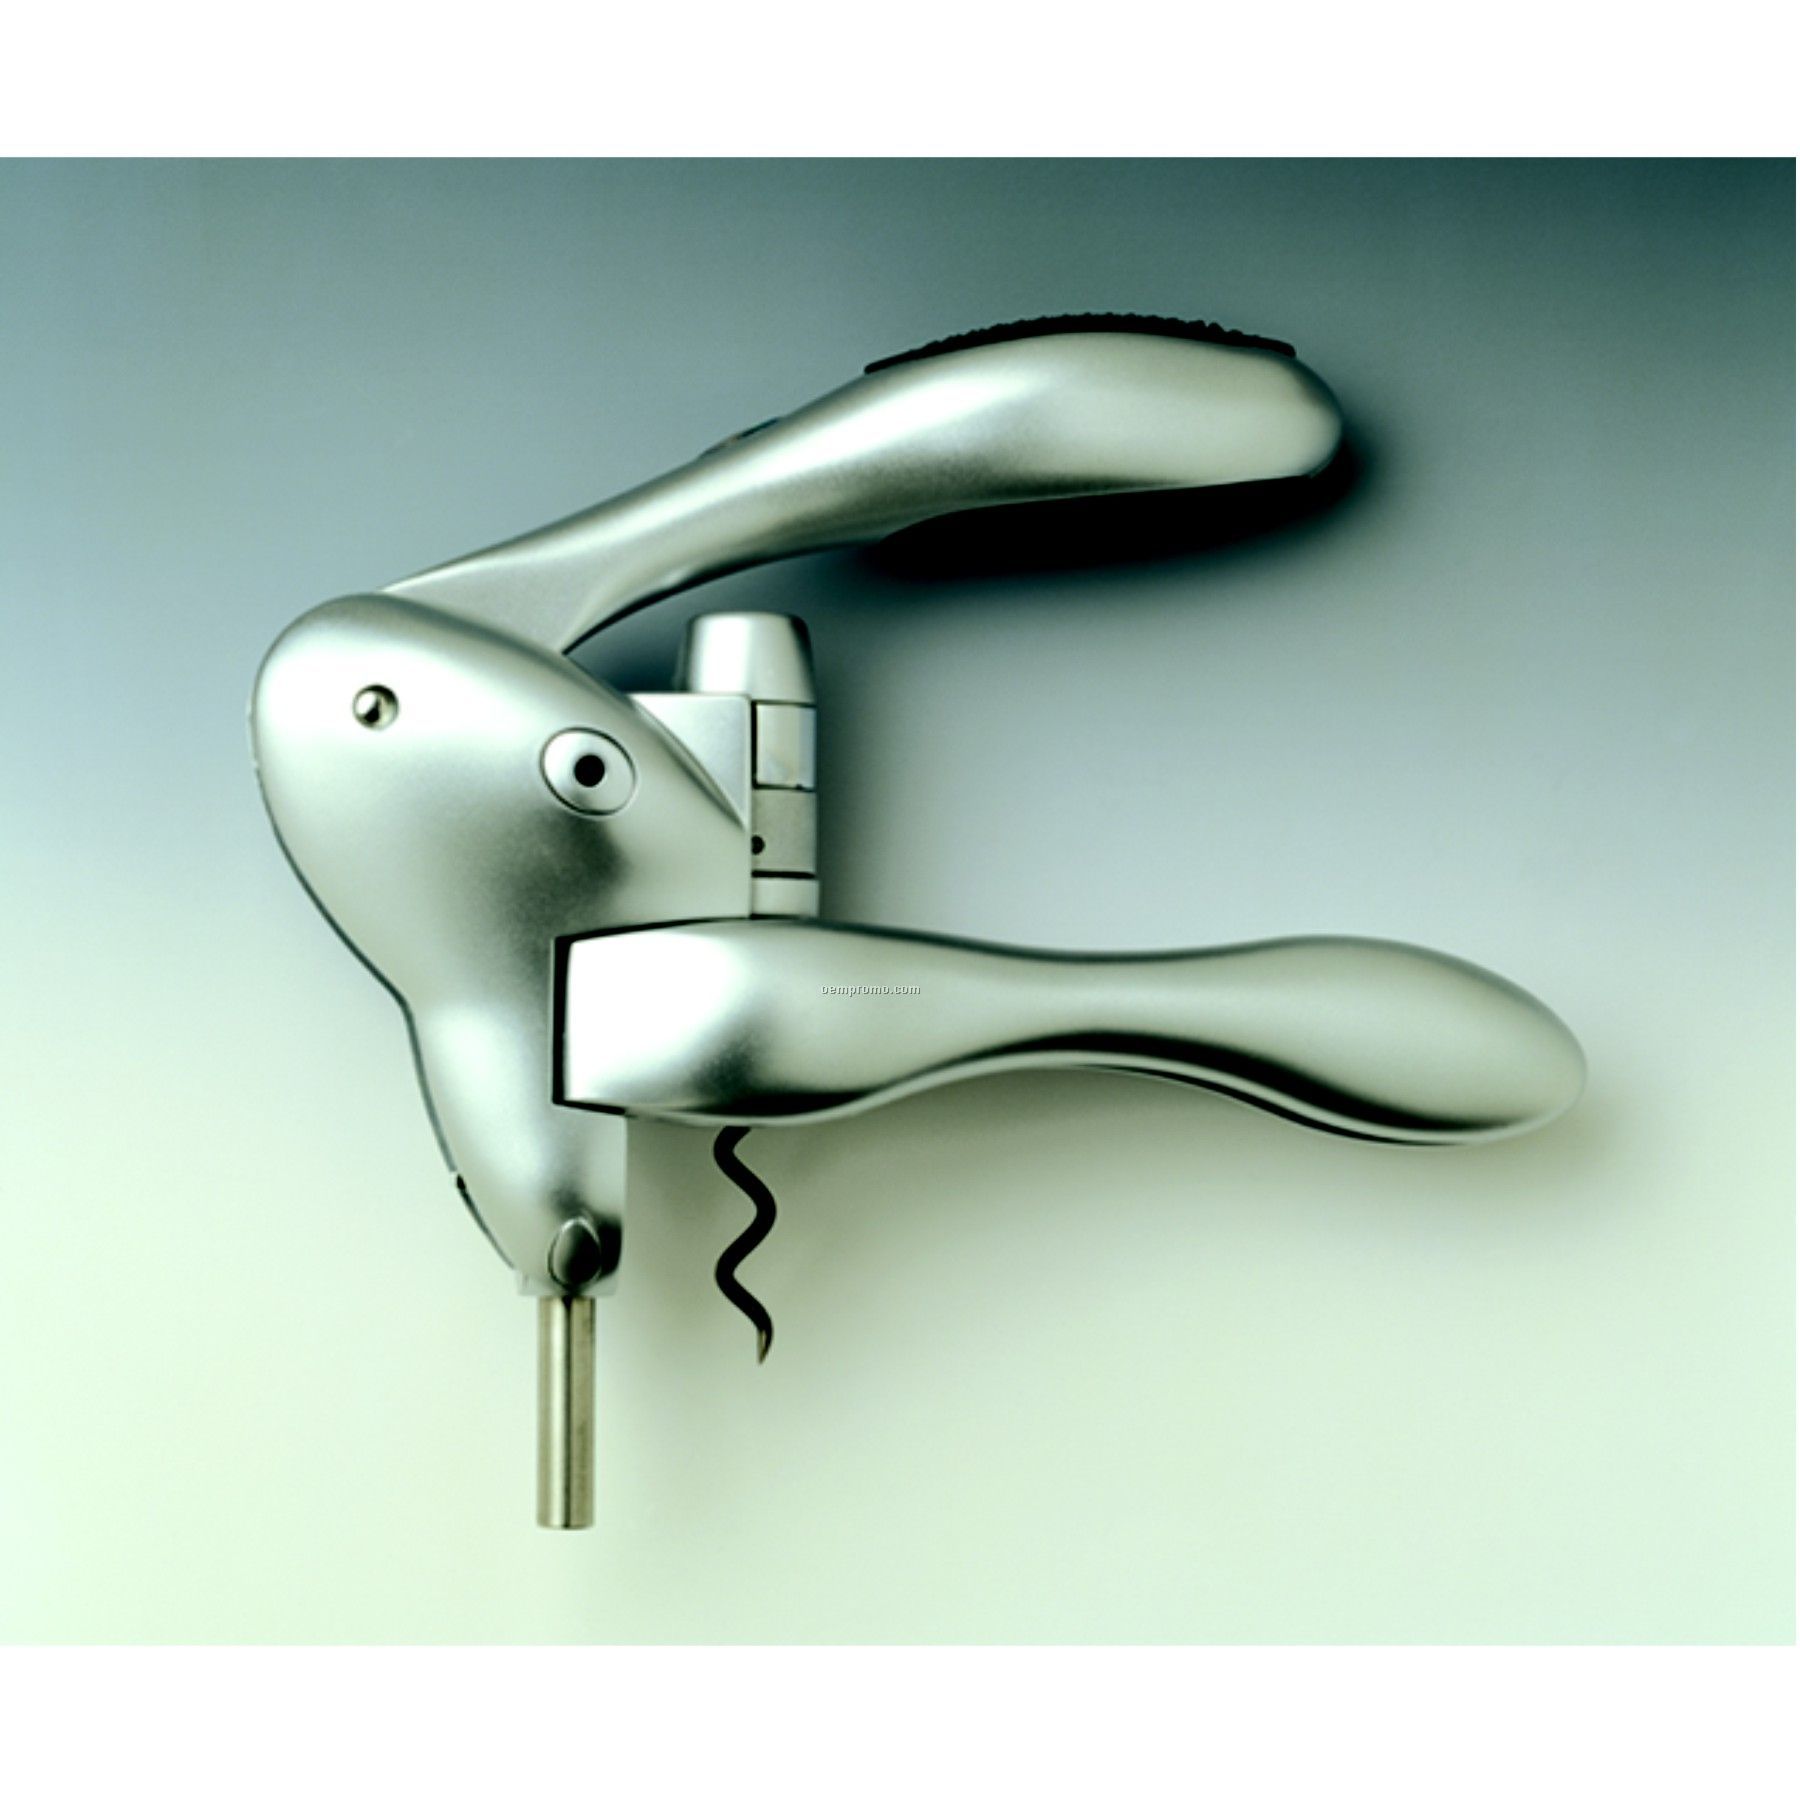 The Rabbit Silver Corkscrew